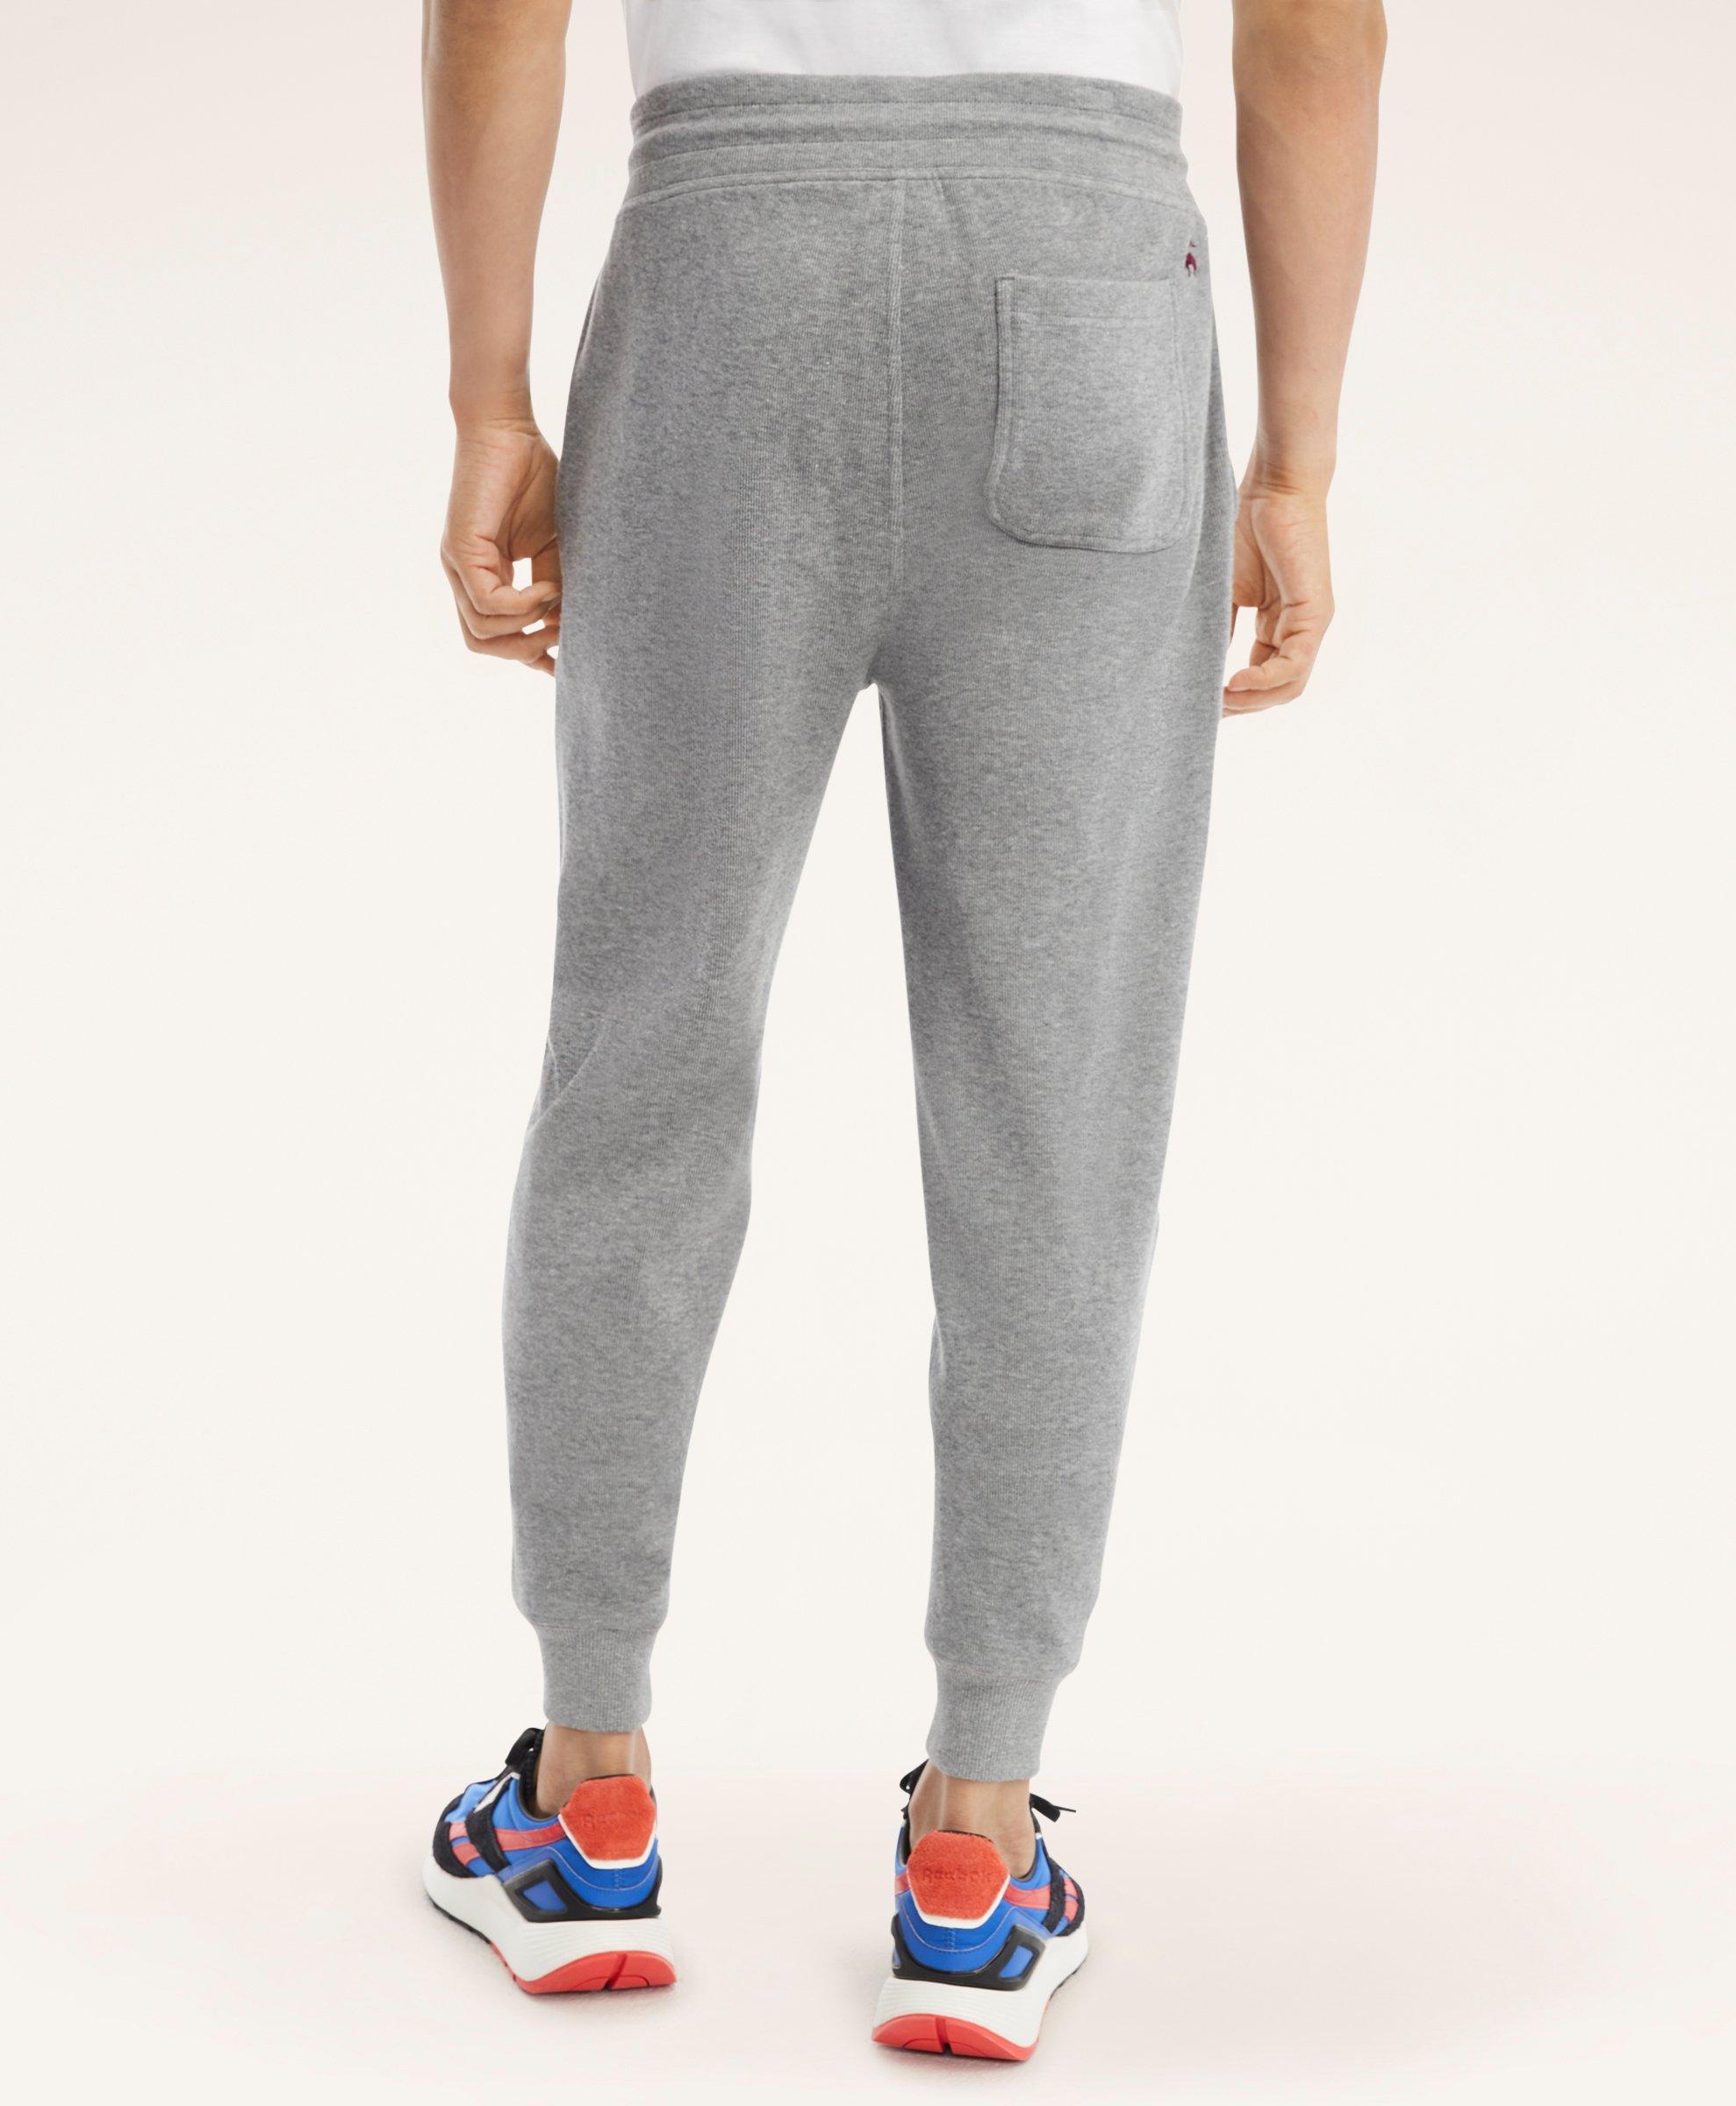 Big & Tall Men's Xersion Sweat Pants Gray Sz:2XLT Pockets/Elastic Waist  Drawstri on eBid Italy